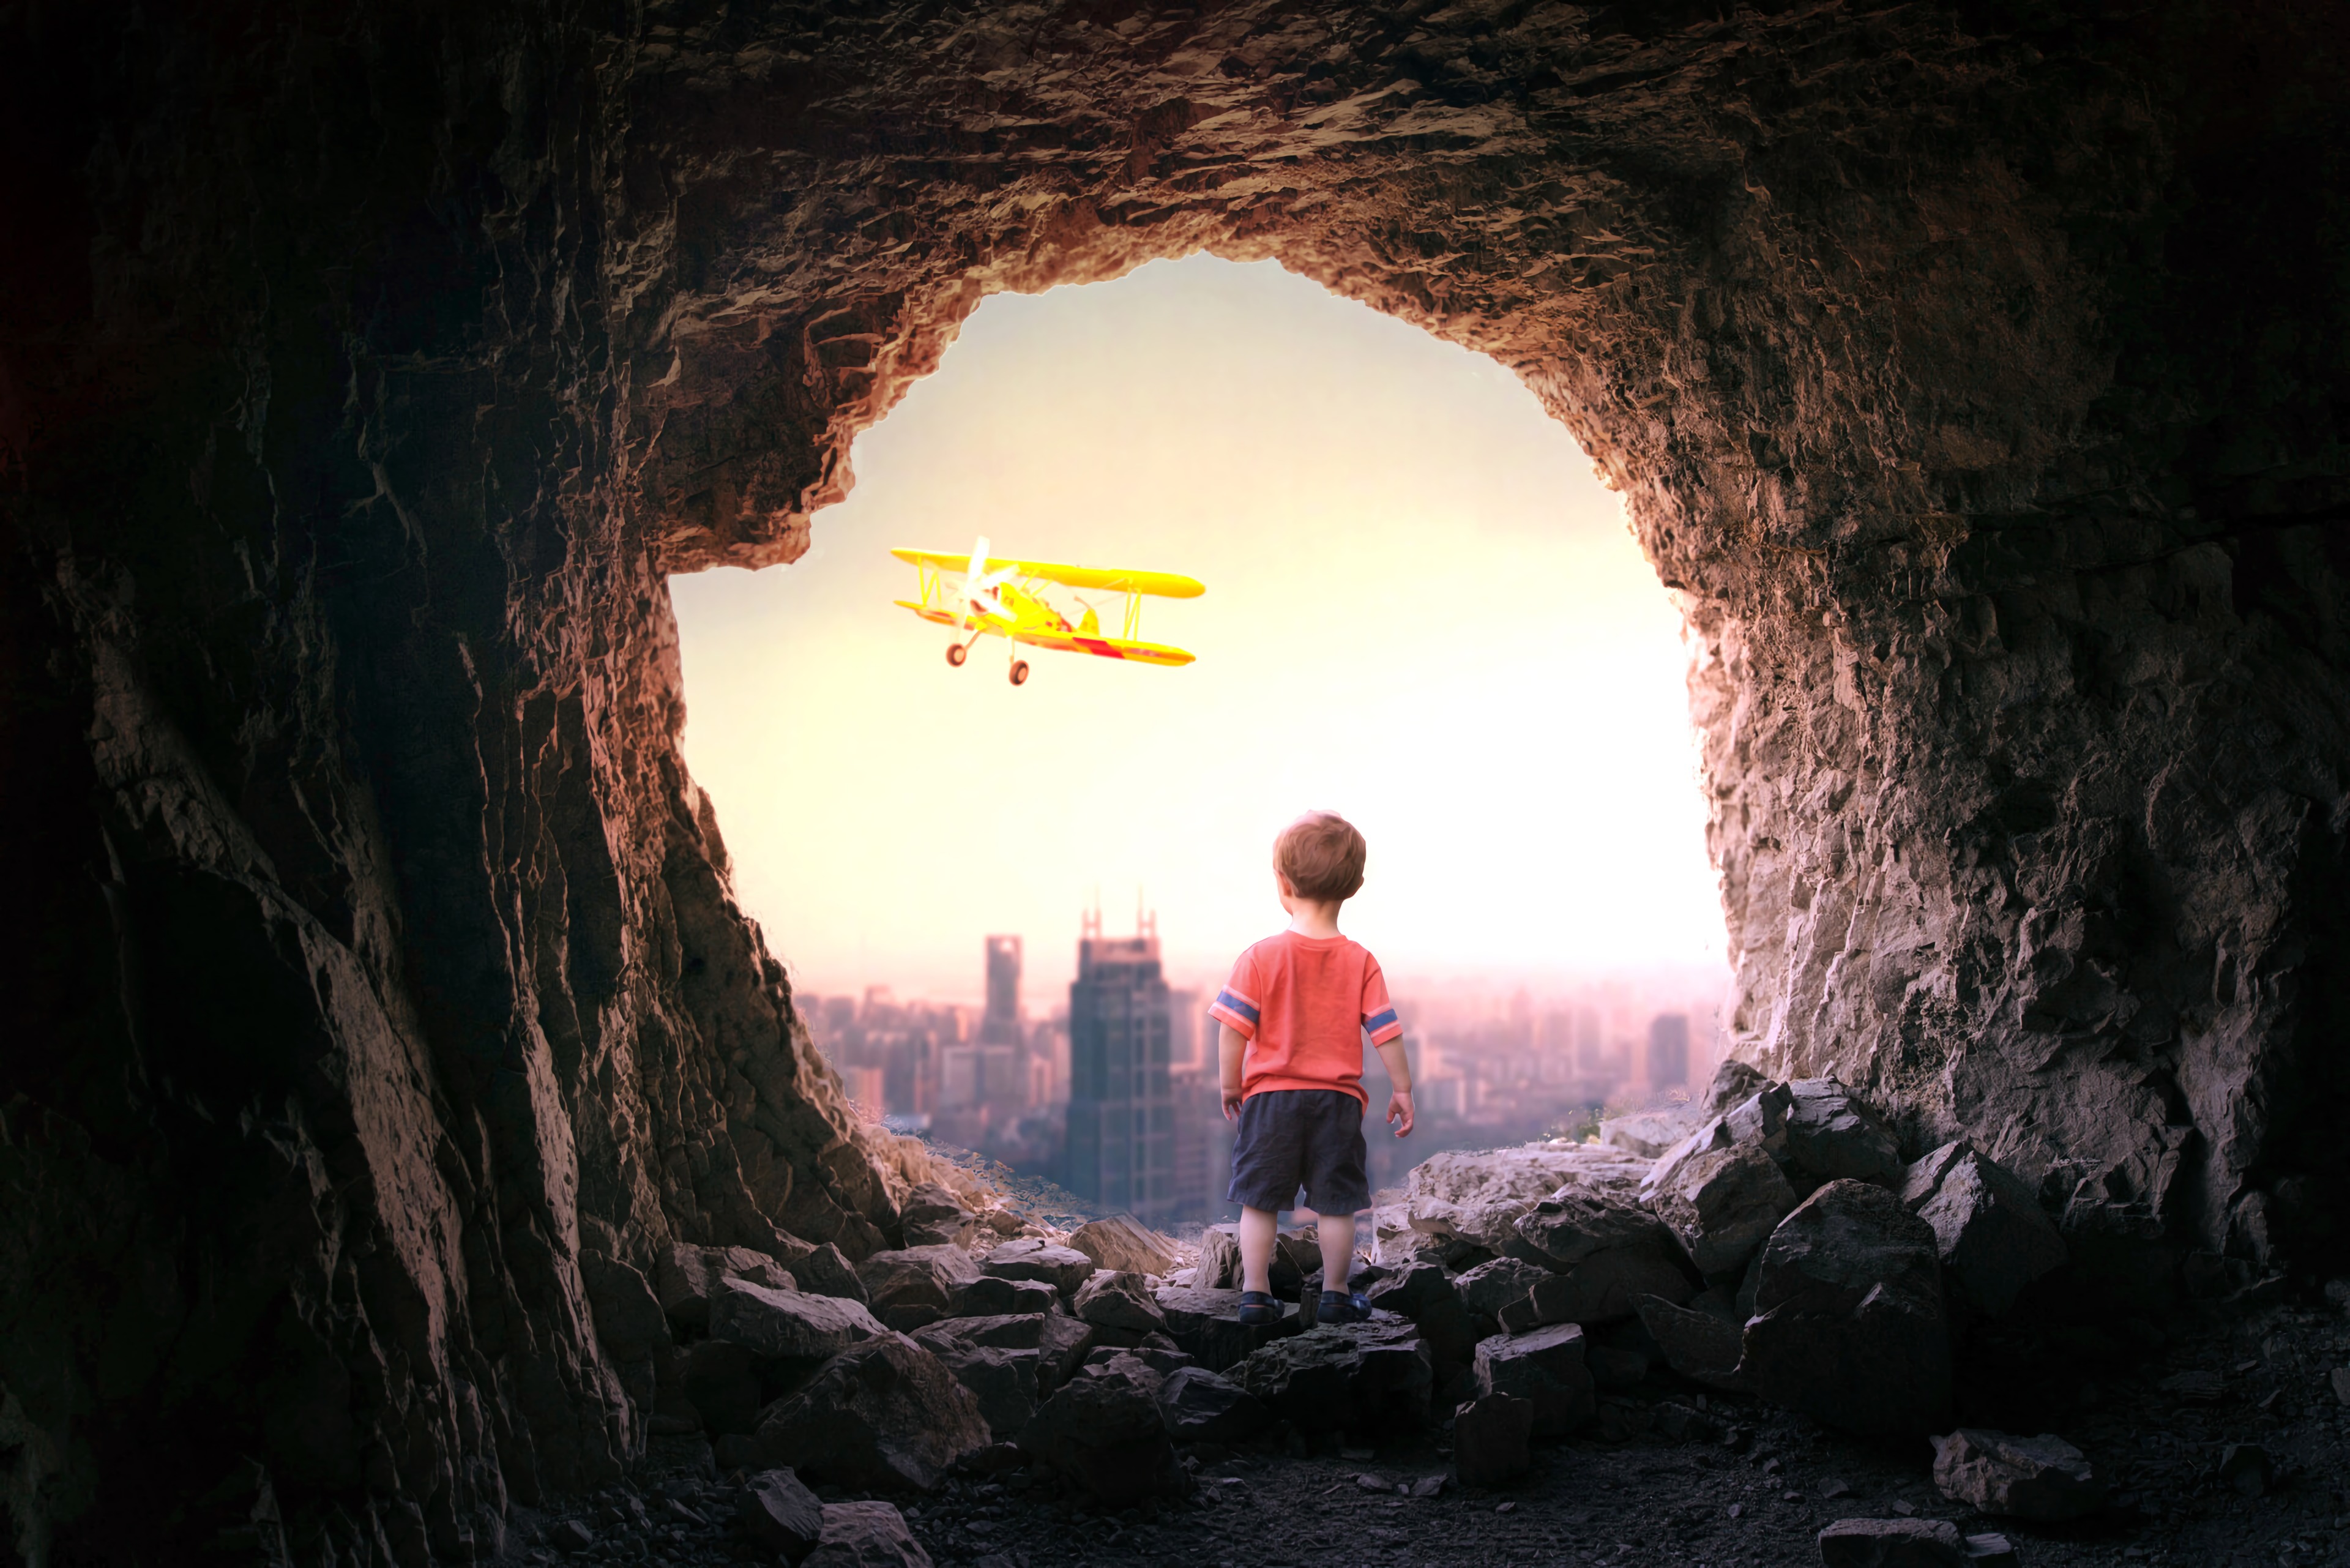 plane, miscellanea, cave, city, miscellaneous, airplane, view, child